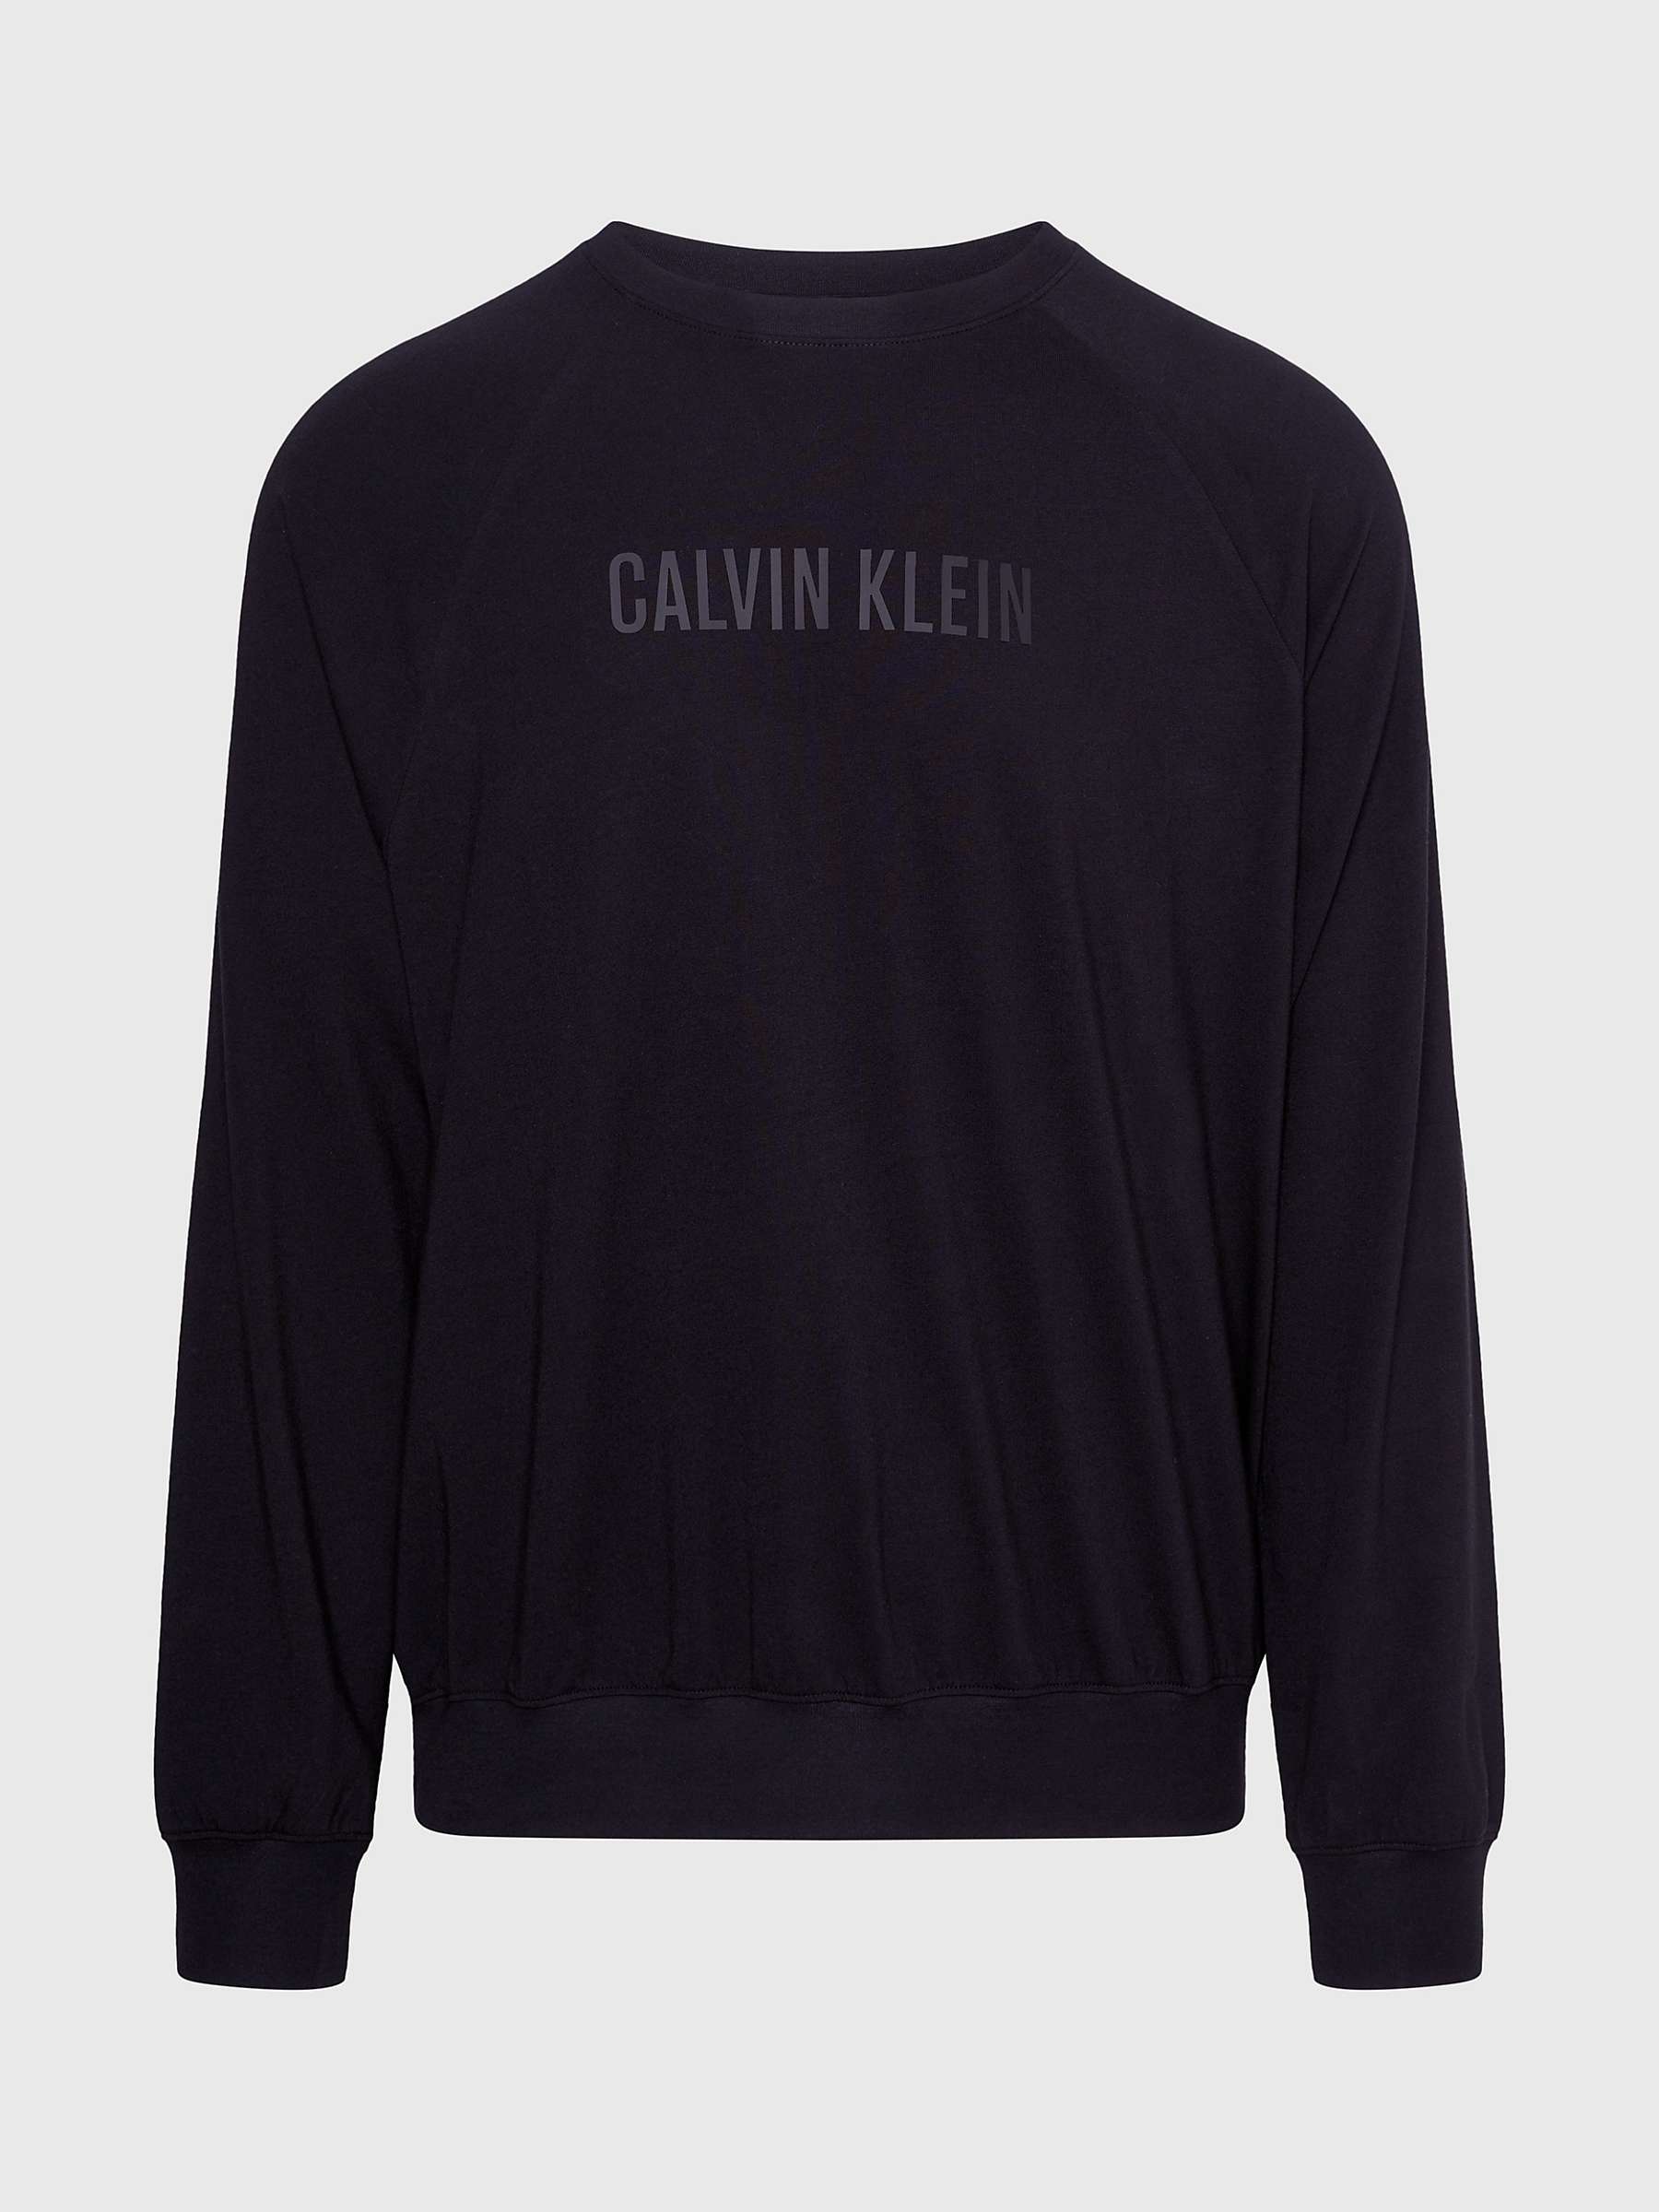 Buy Calvin Klein Slogan Jumper, Black Online at johnlewis.com